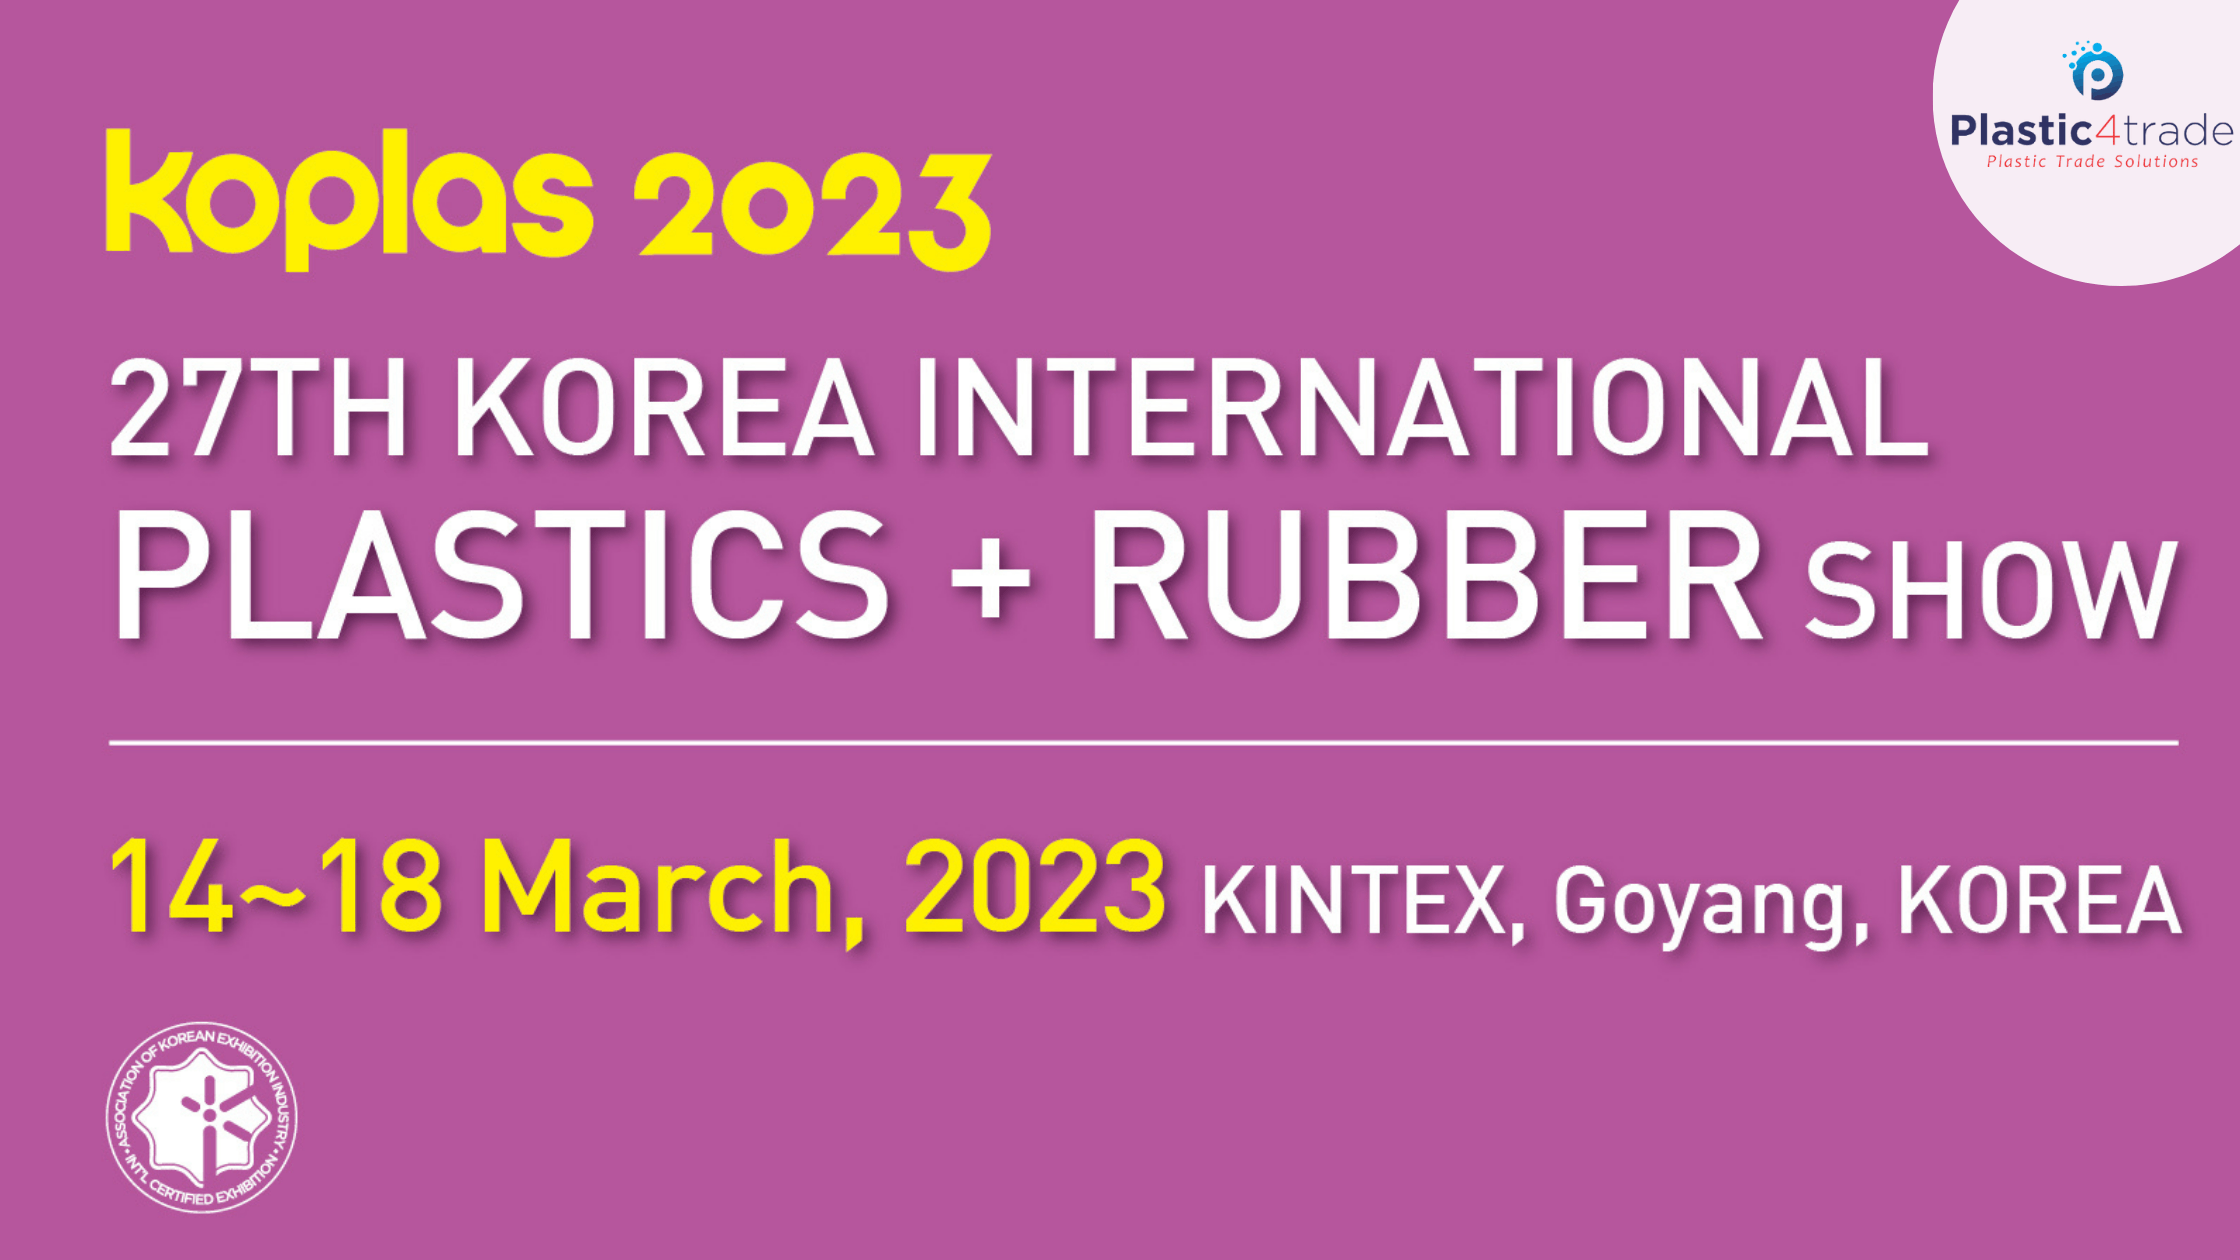 Koplas 2023 Plastics & Rubber Show in Goyang, Korea